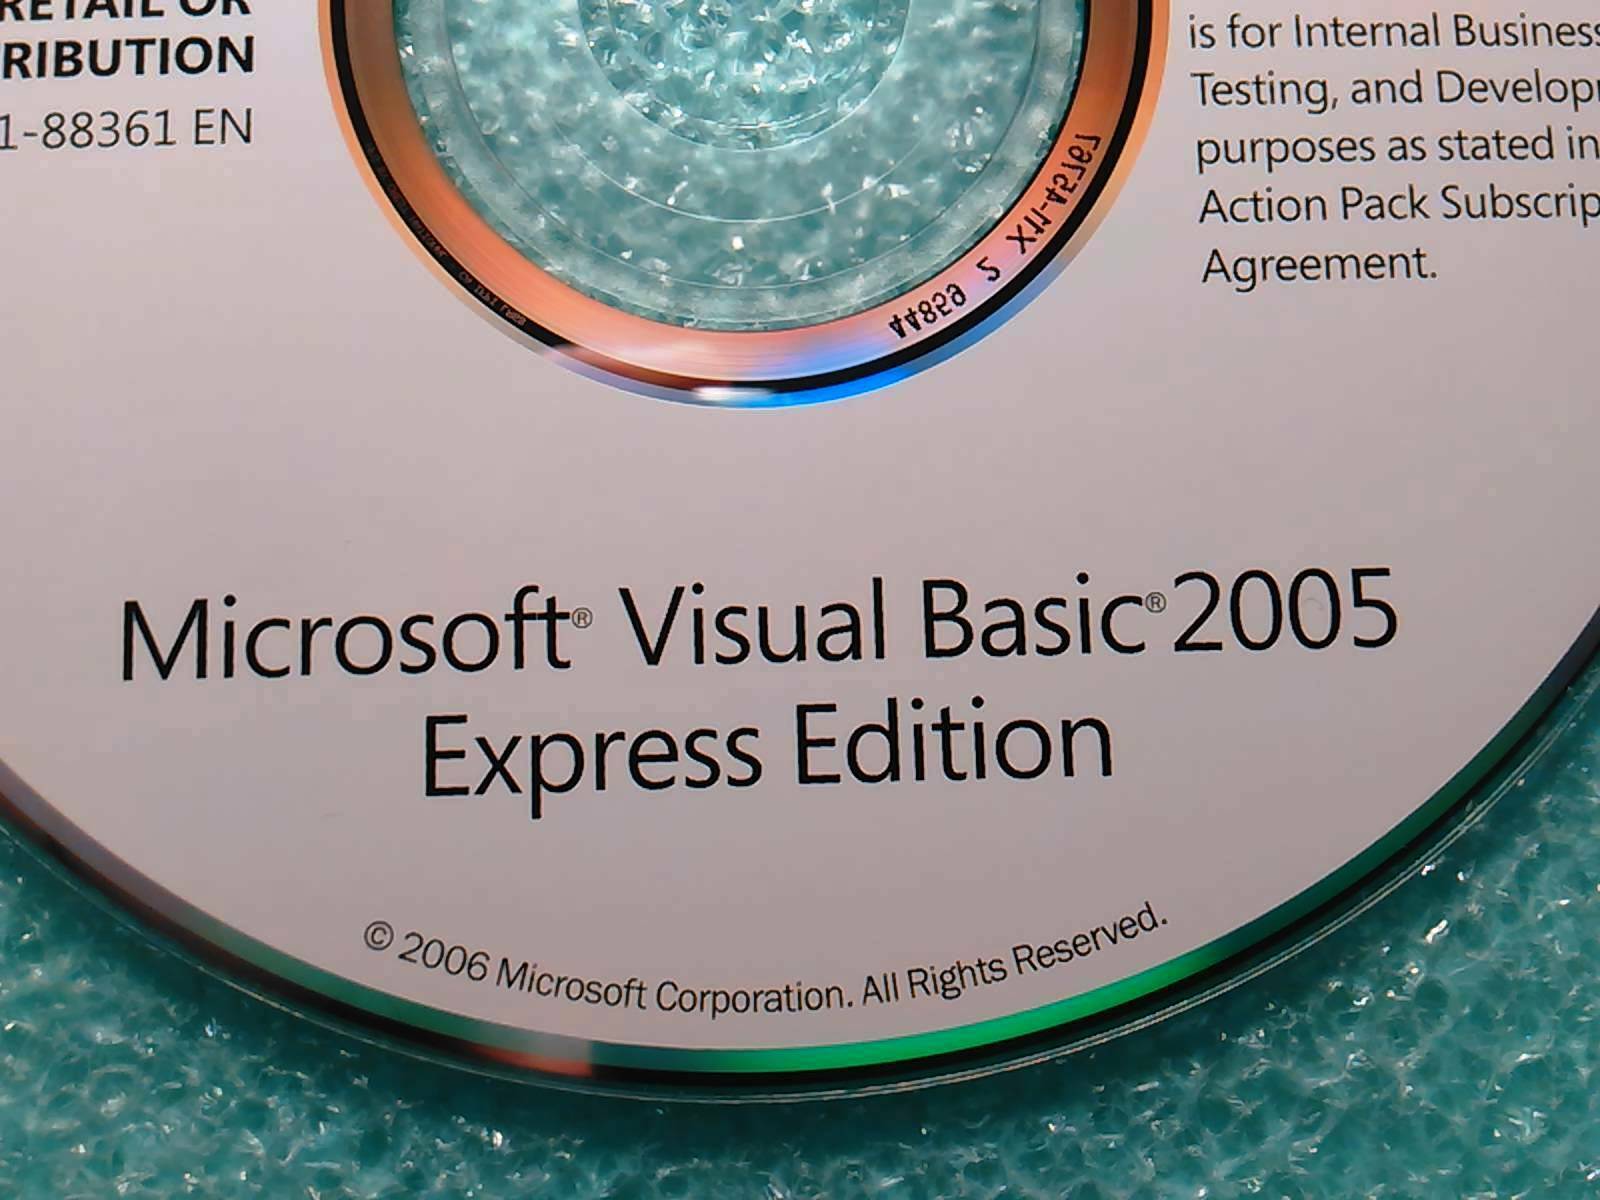 Microsoft Visual Basic 2005 Express Edition w/ Permanent License